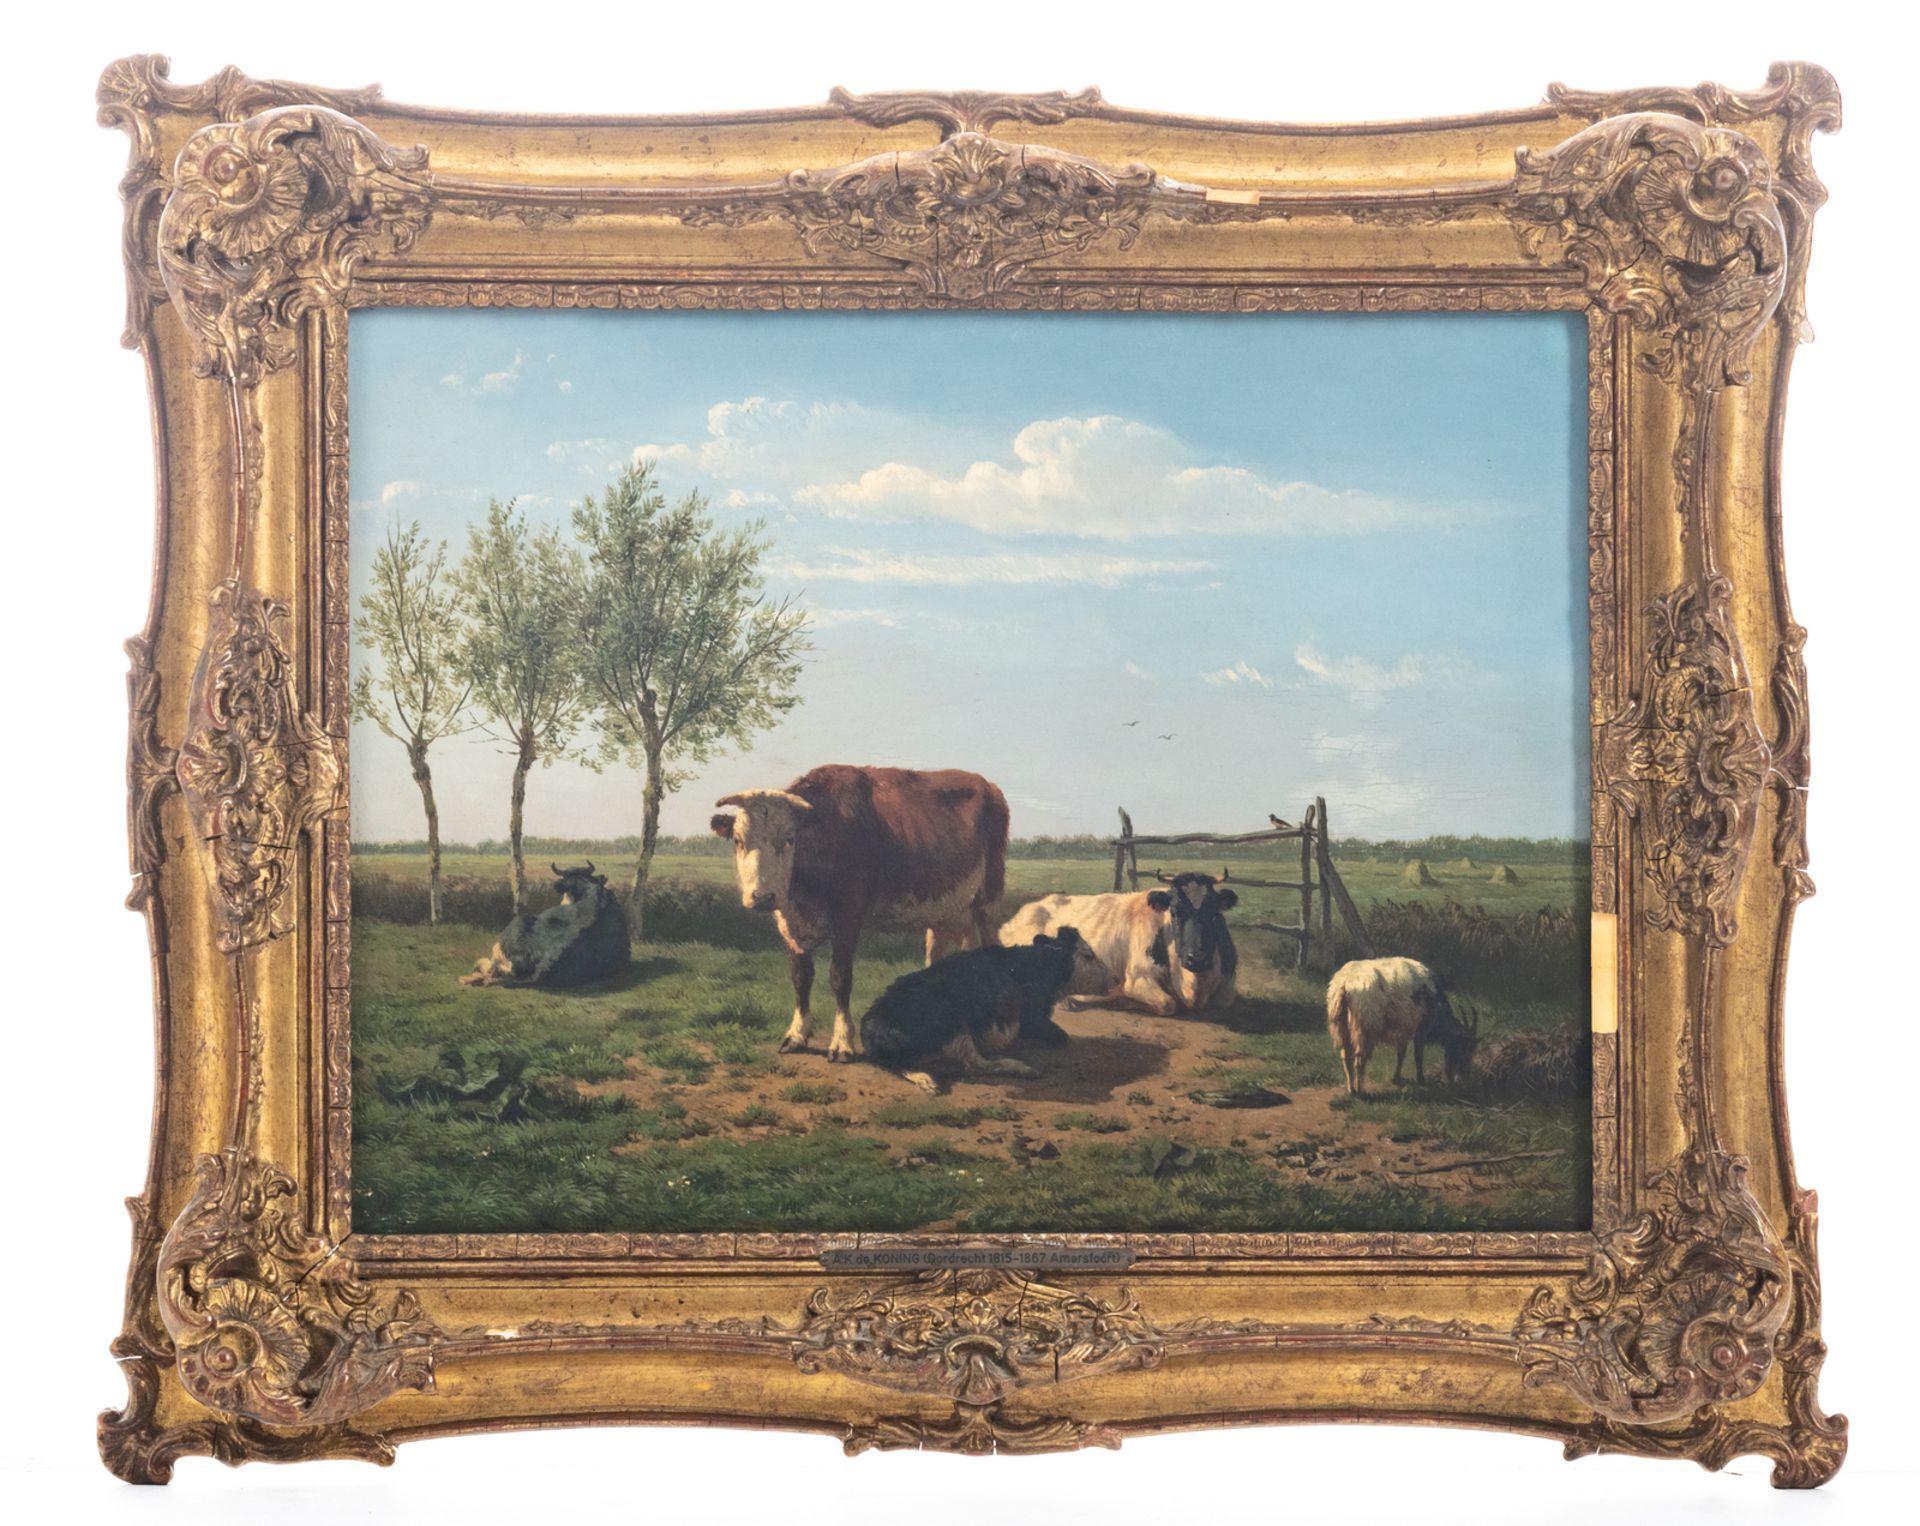 De Koningh A.K., cattle in a landscape, oil on panel, ex. De Vuyst 05 1999 (lot 533), 33 x 44 cm - Image 2 of 4